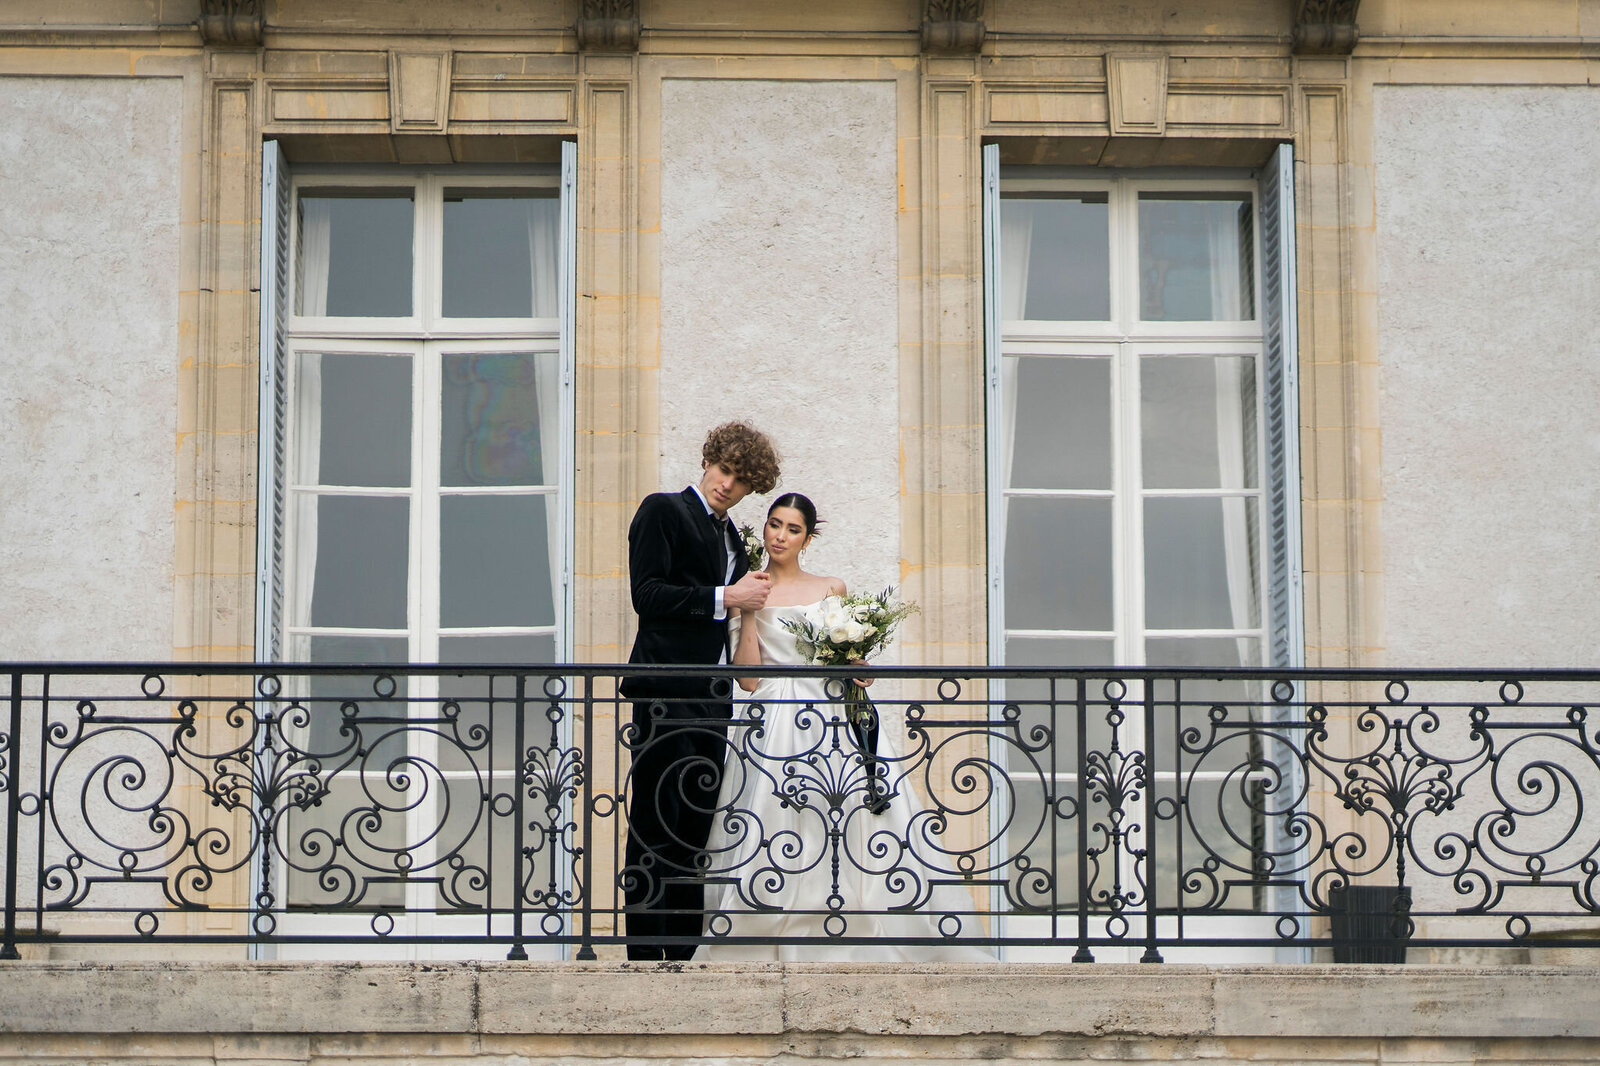 124-Chateau-de-Santeny-Paris-France-Inspiration-Love-Story Elopement-Cinematic-Romance-Destination-Wedding-Editorial-Luxury-Fine-Art-Lisa-Vigliotta-Photography